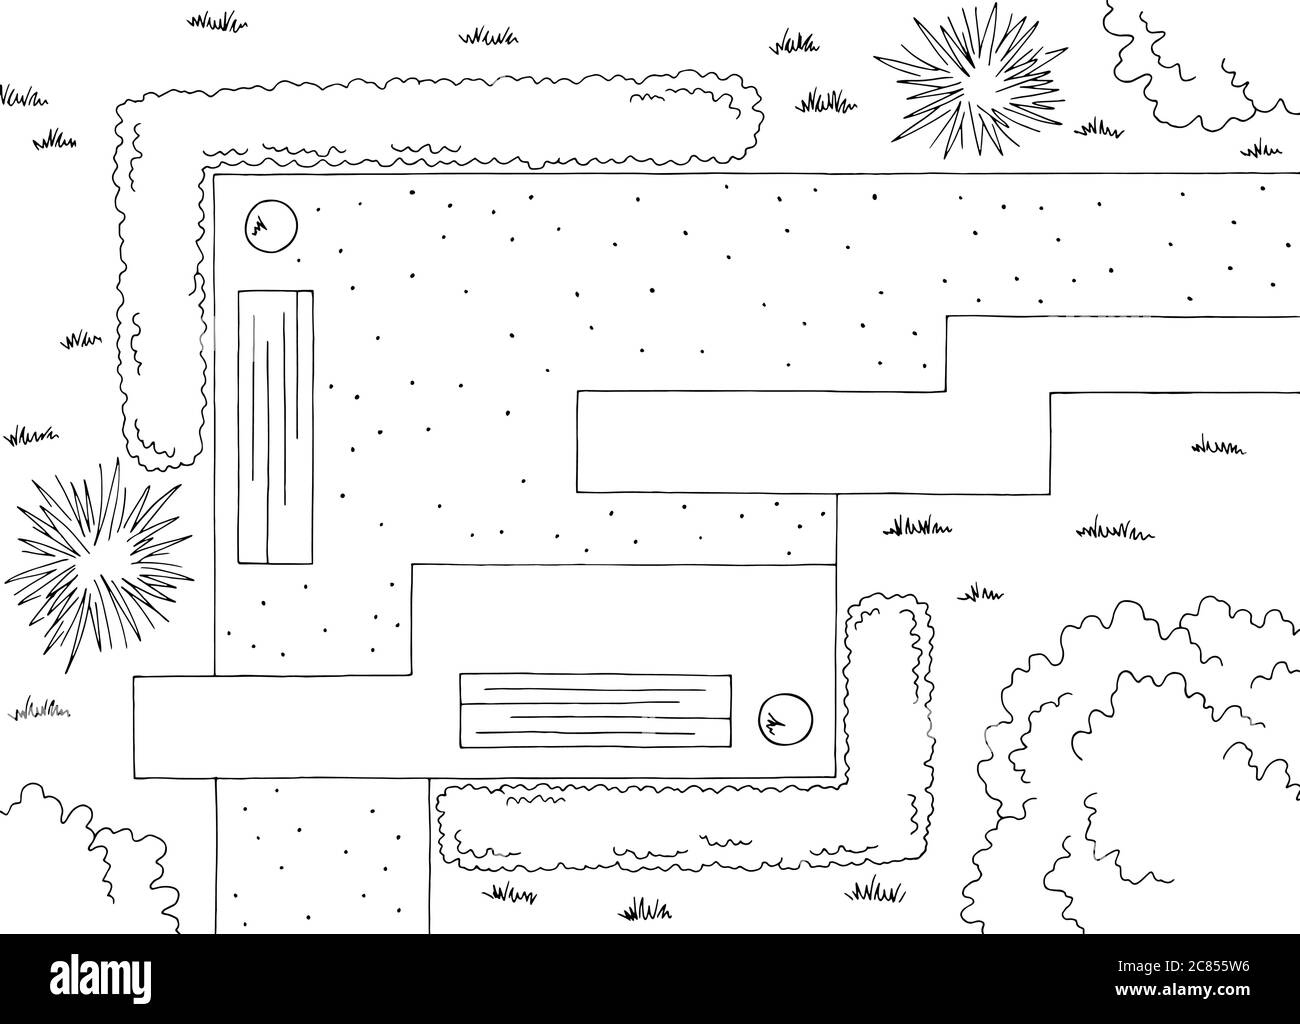 Park landscape architect design plan graphic black white sketch illustration vector Stock Vector